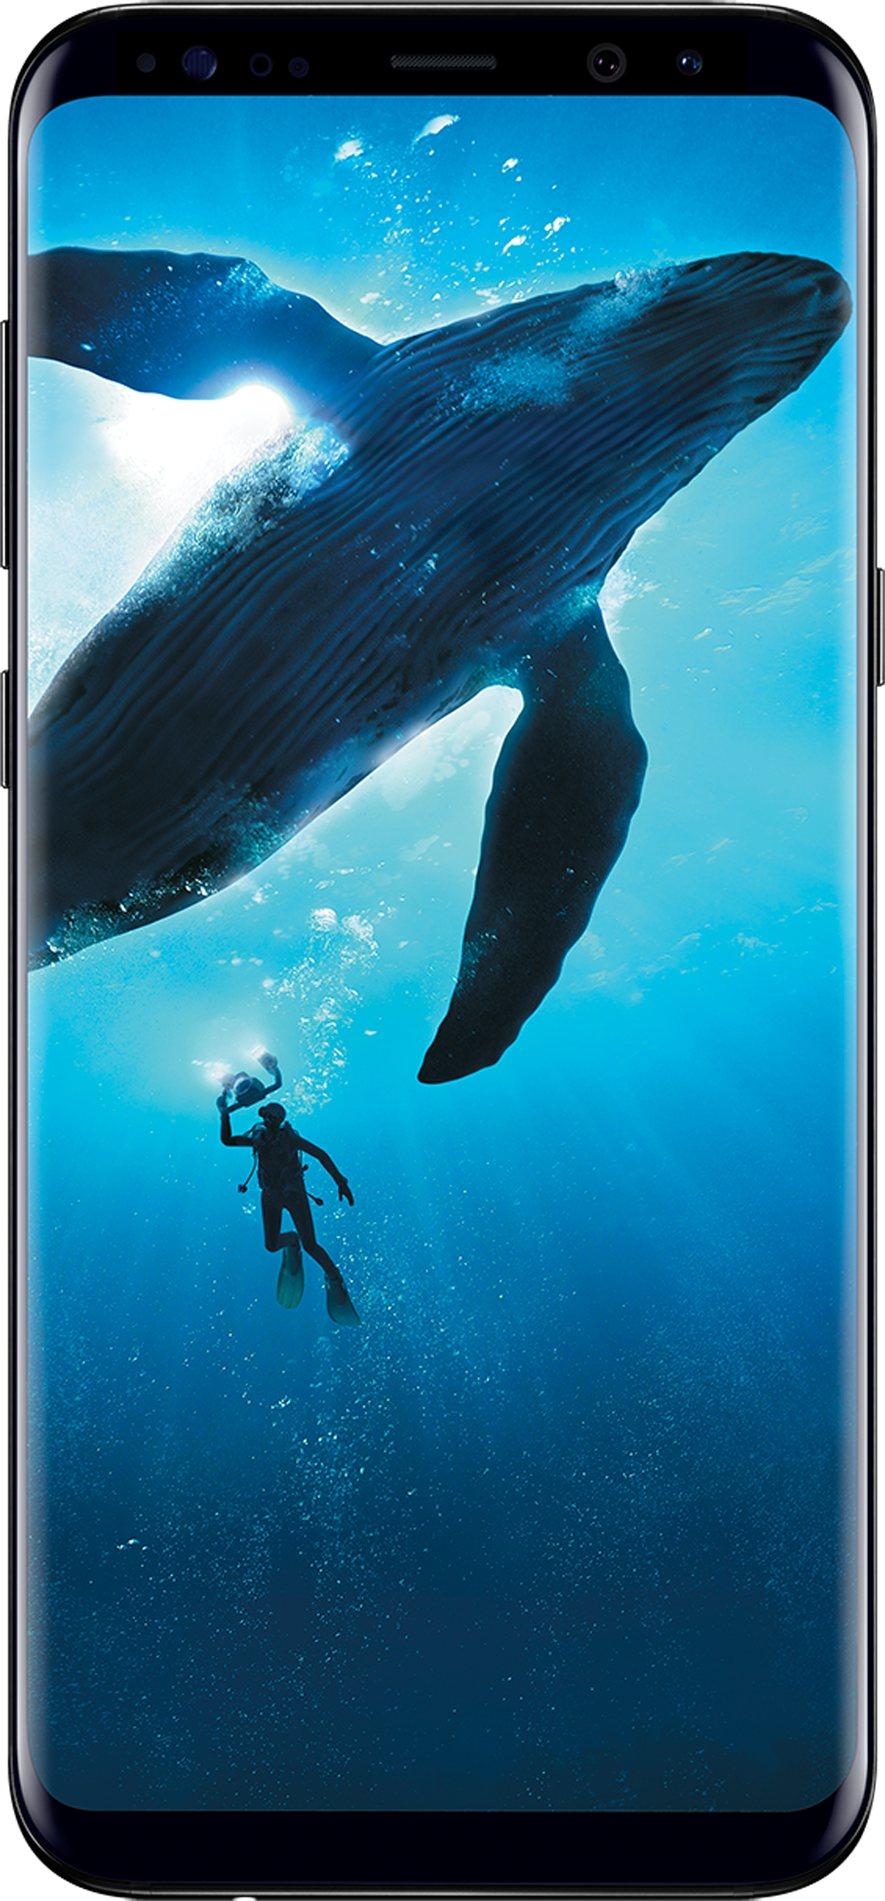 Galaxy S8+ SM-G955FD